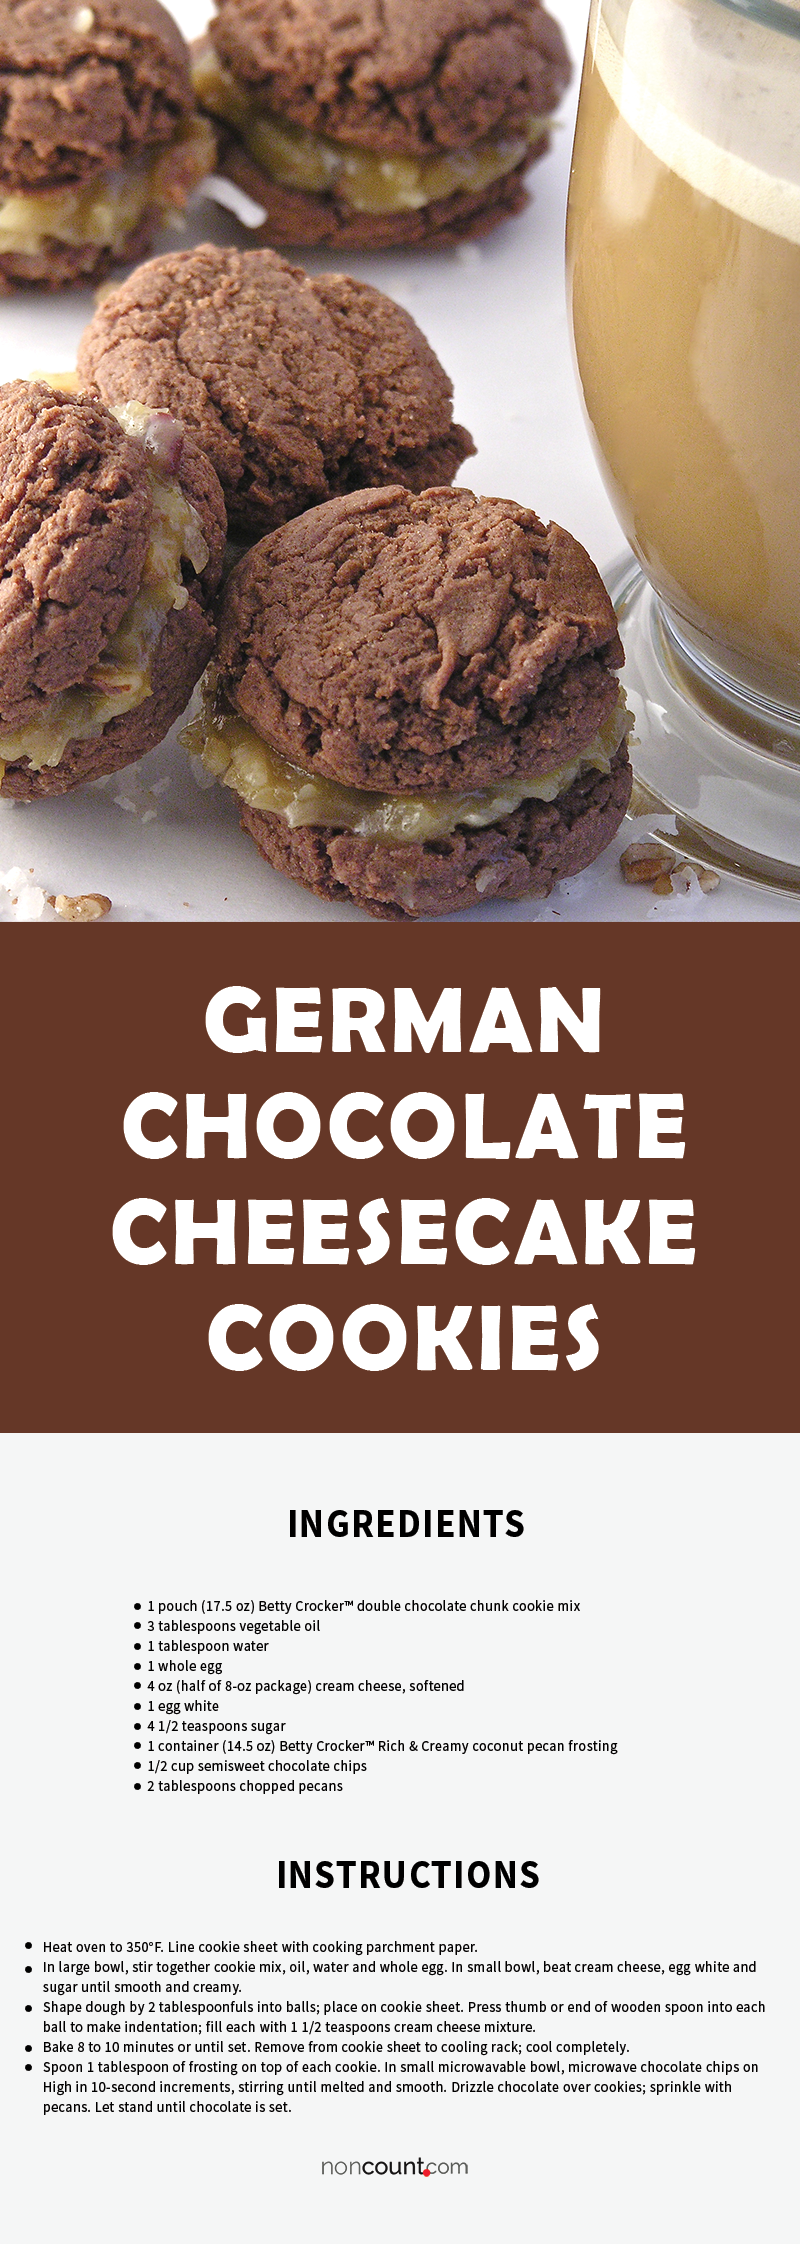 Recipe Image of German Chocolate Cheesecake Cookies 